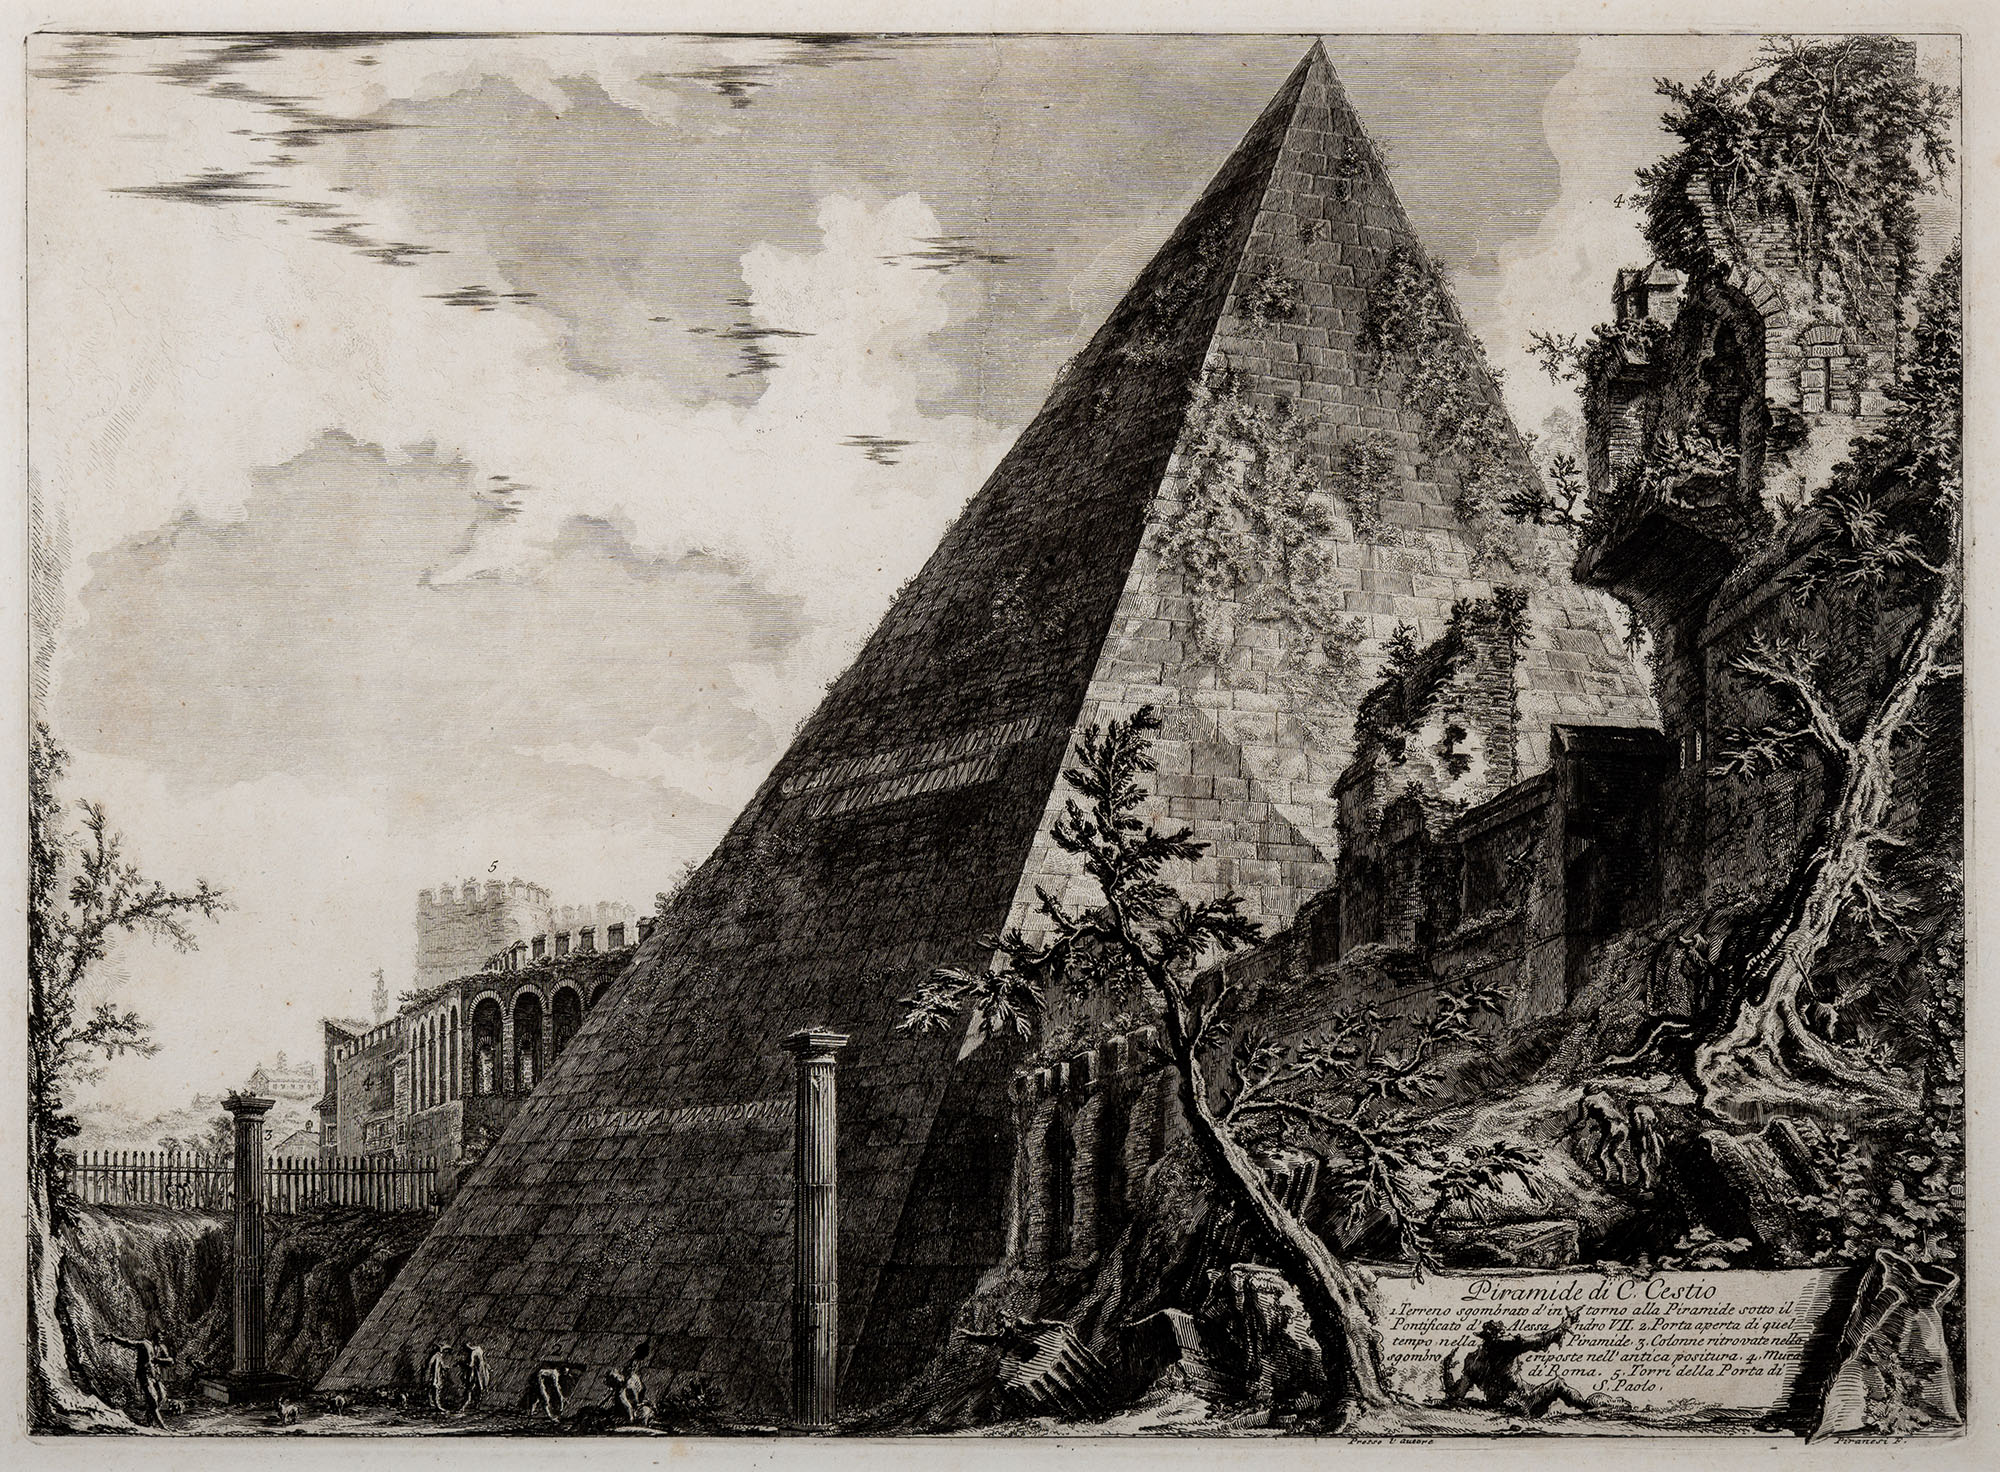 7. Piramide di C. Cestio